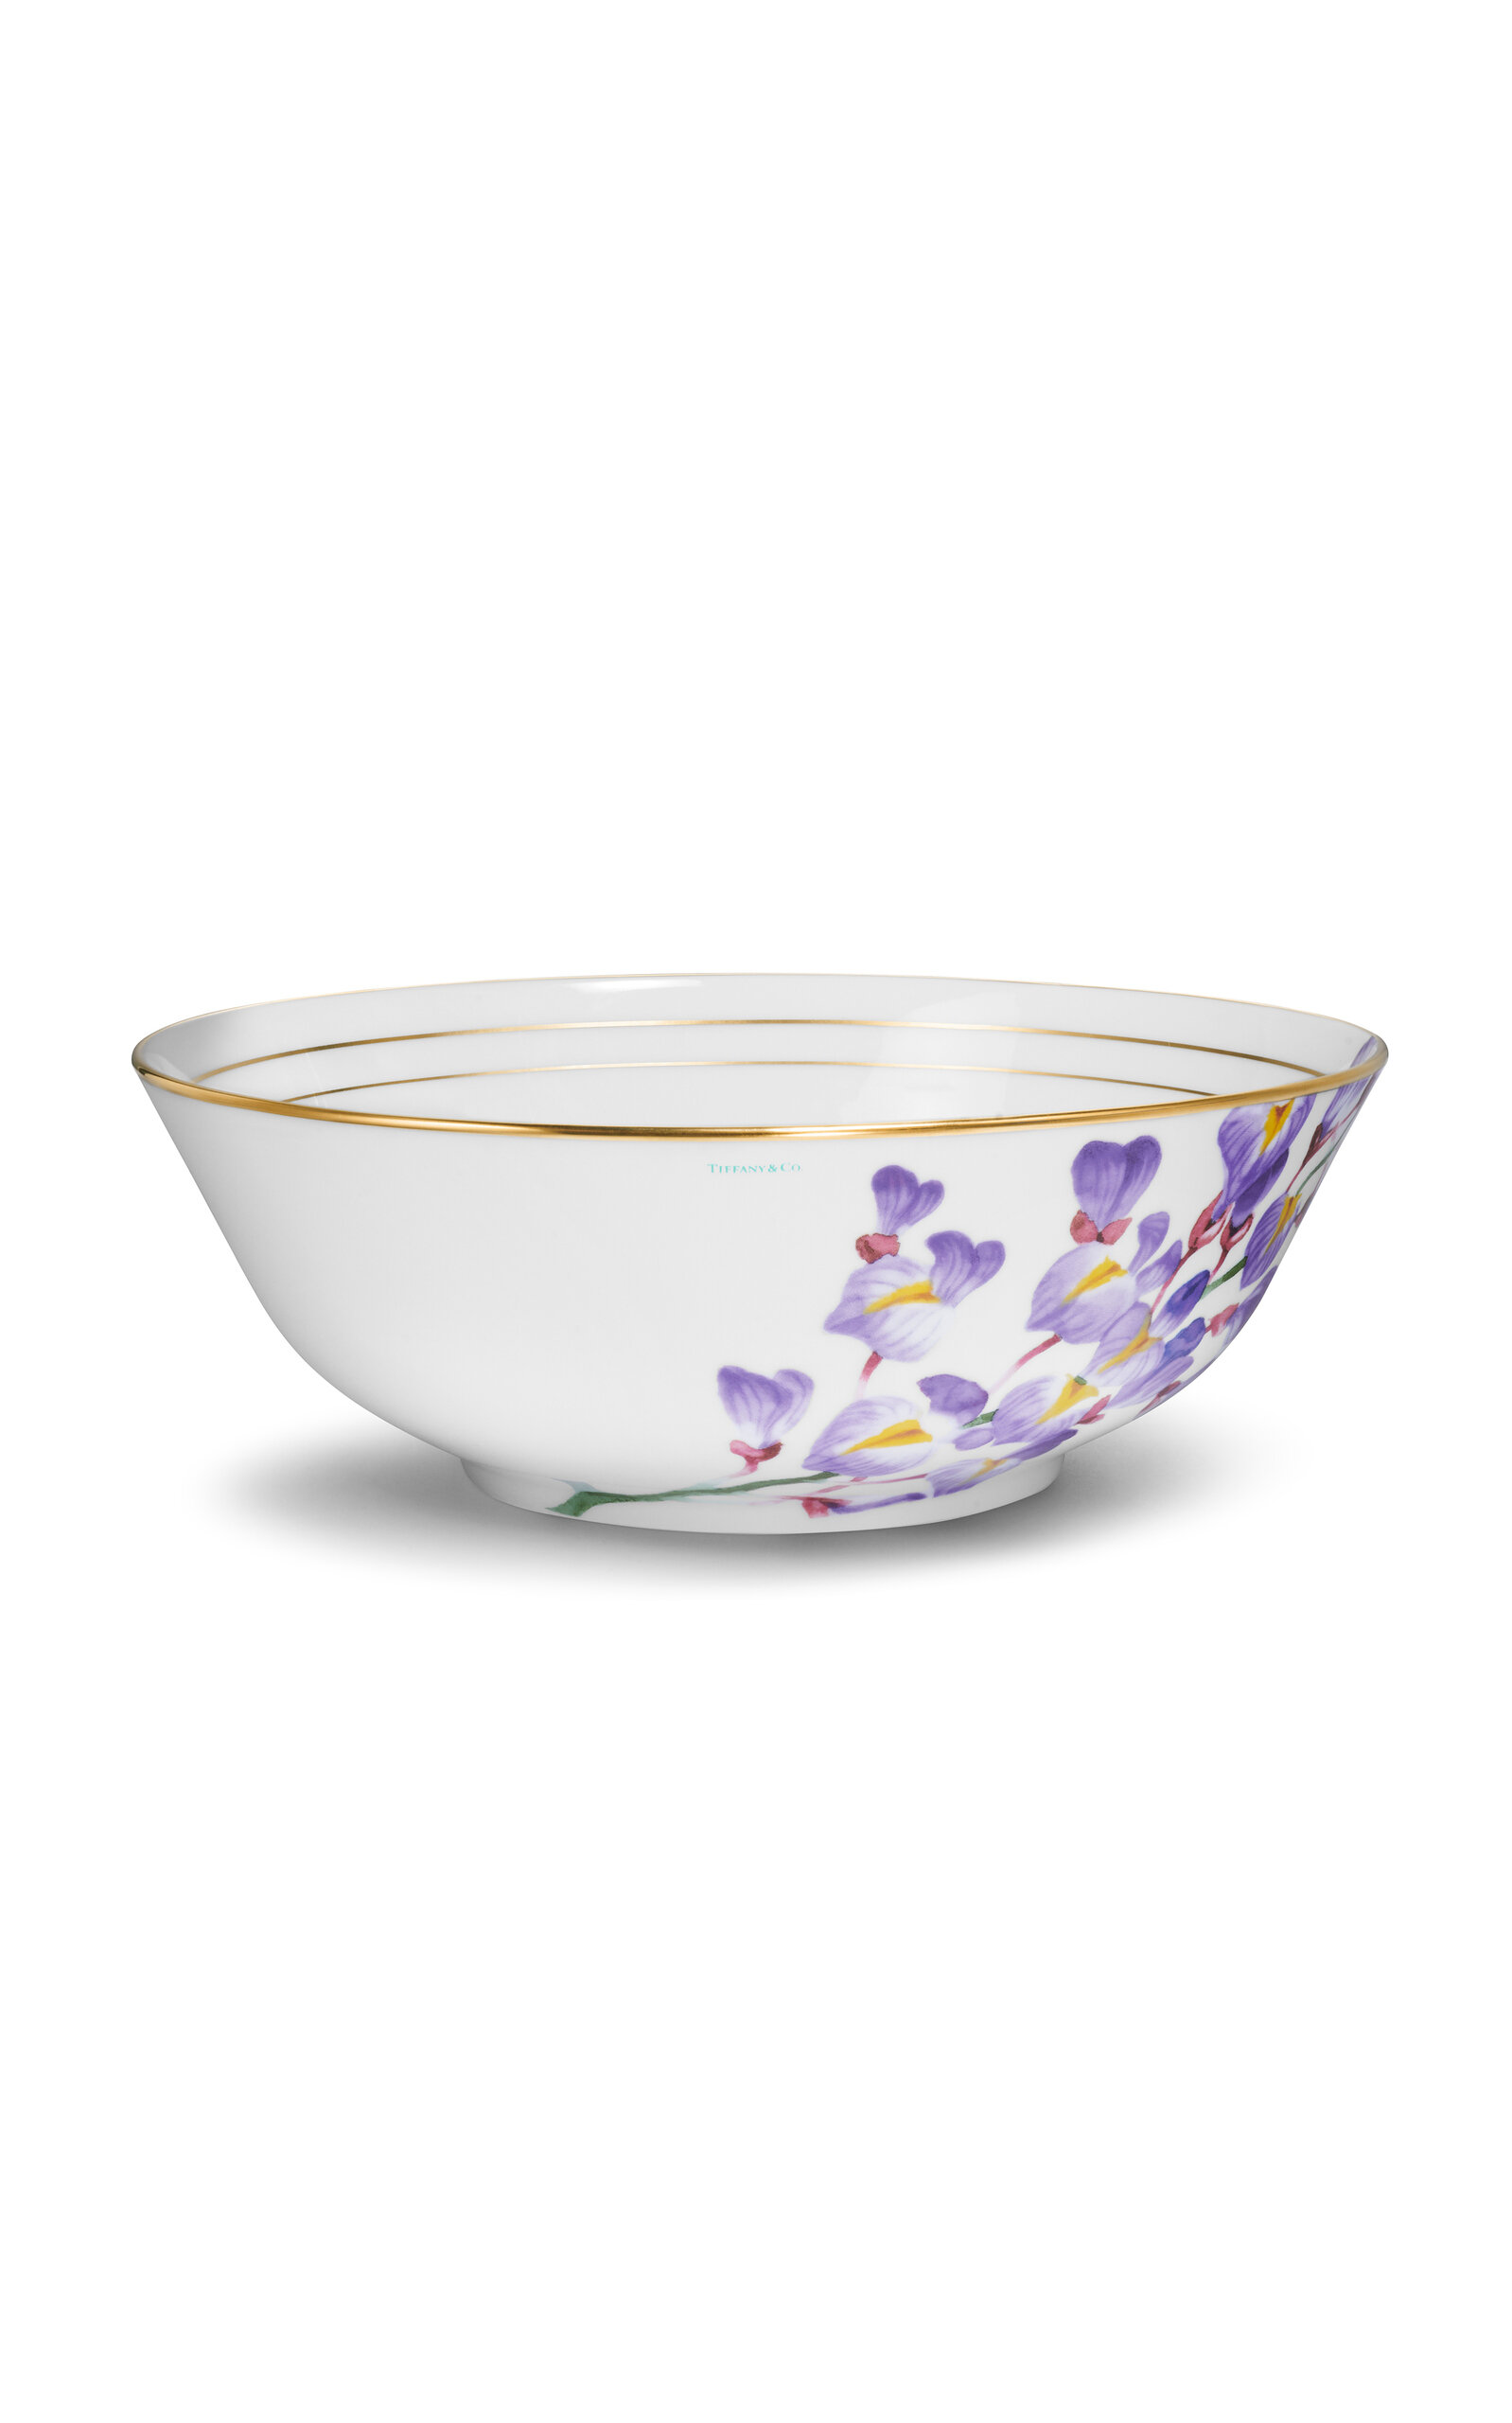 Tiffany & Co Wisteria Porcelain Serving Bowl In Multi